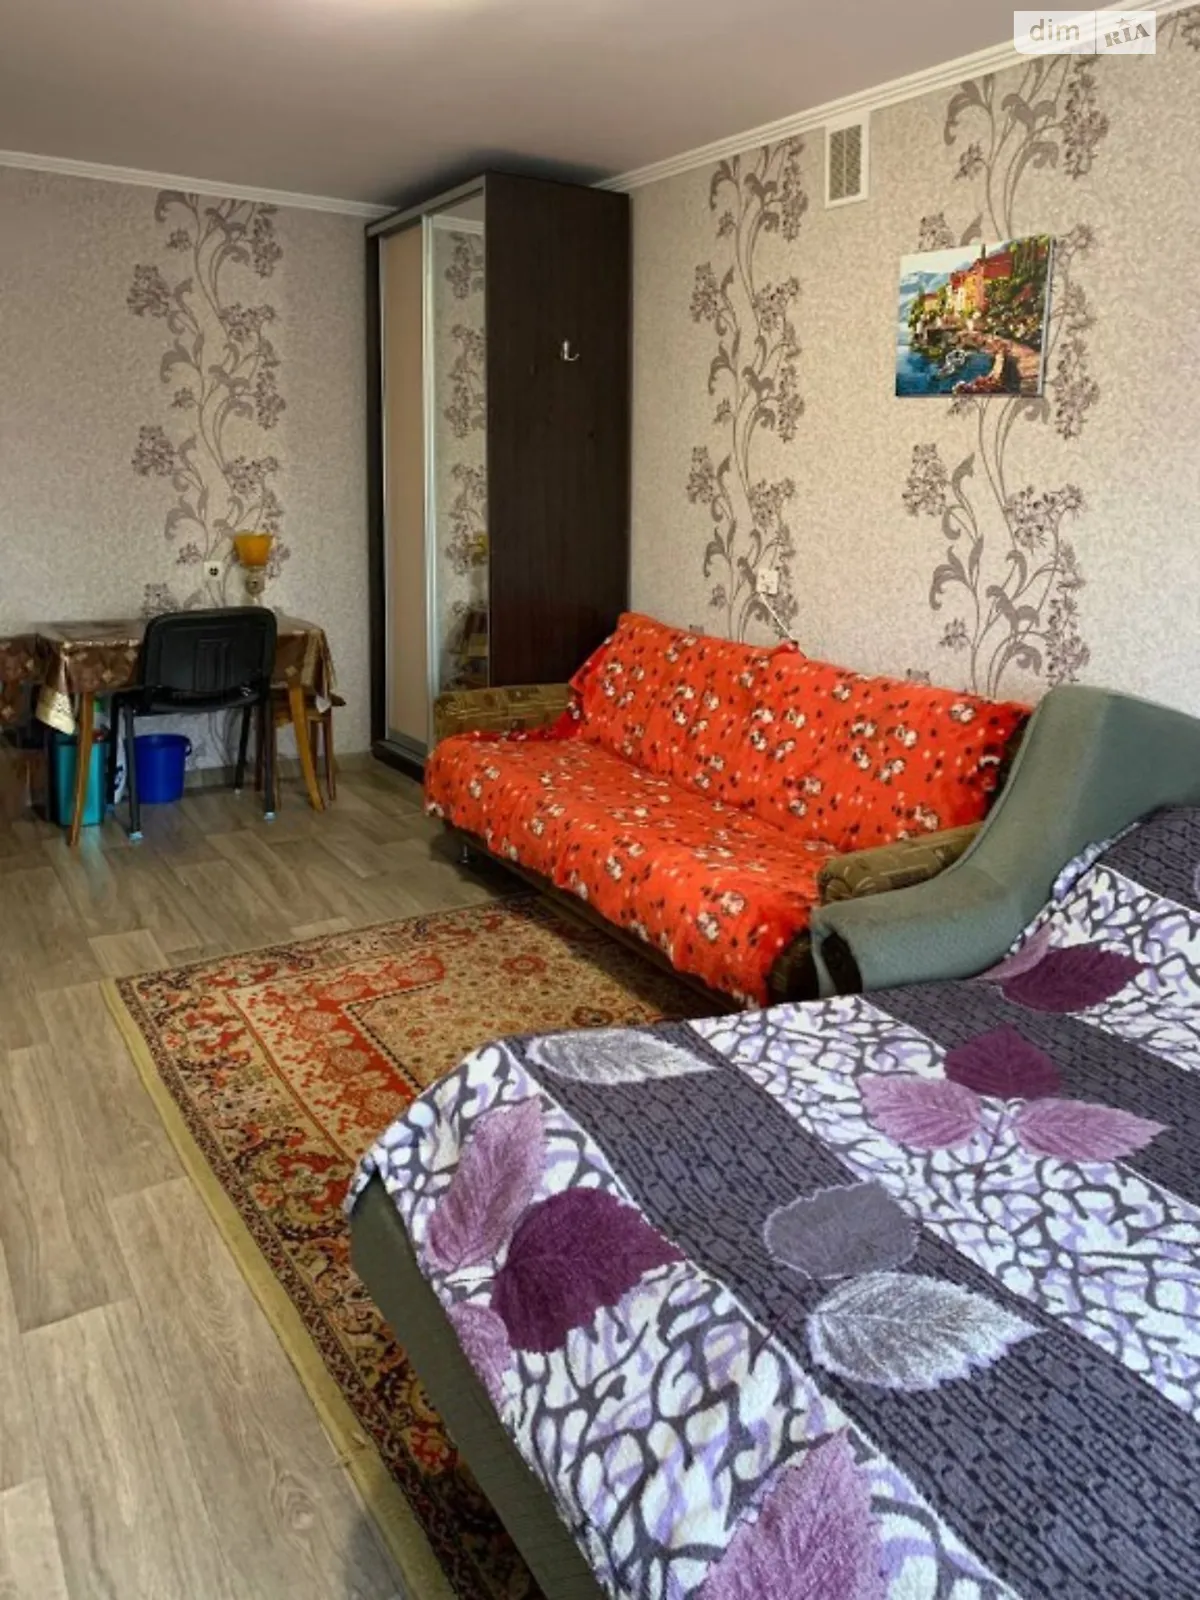 Продается комната 26 кв. м в Ровно, цена: 12500 $